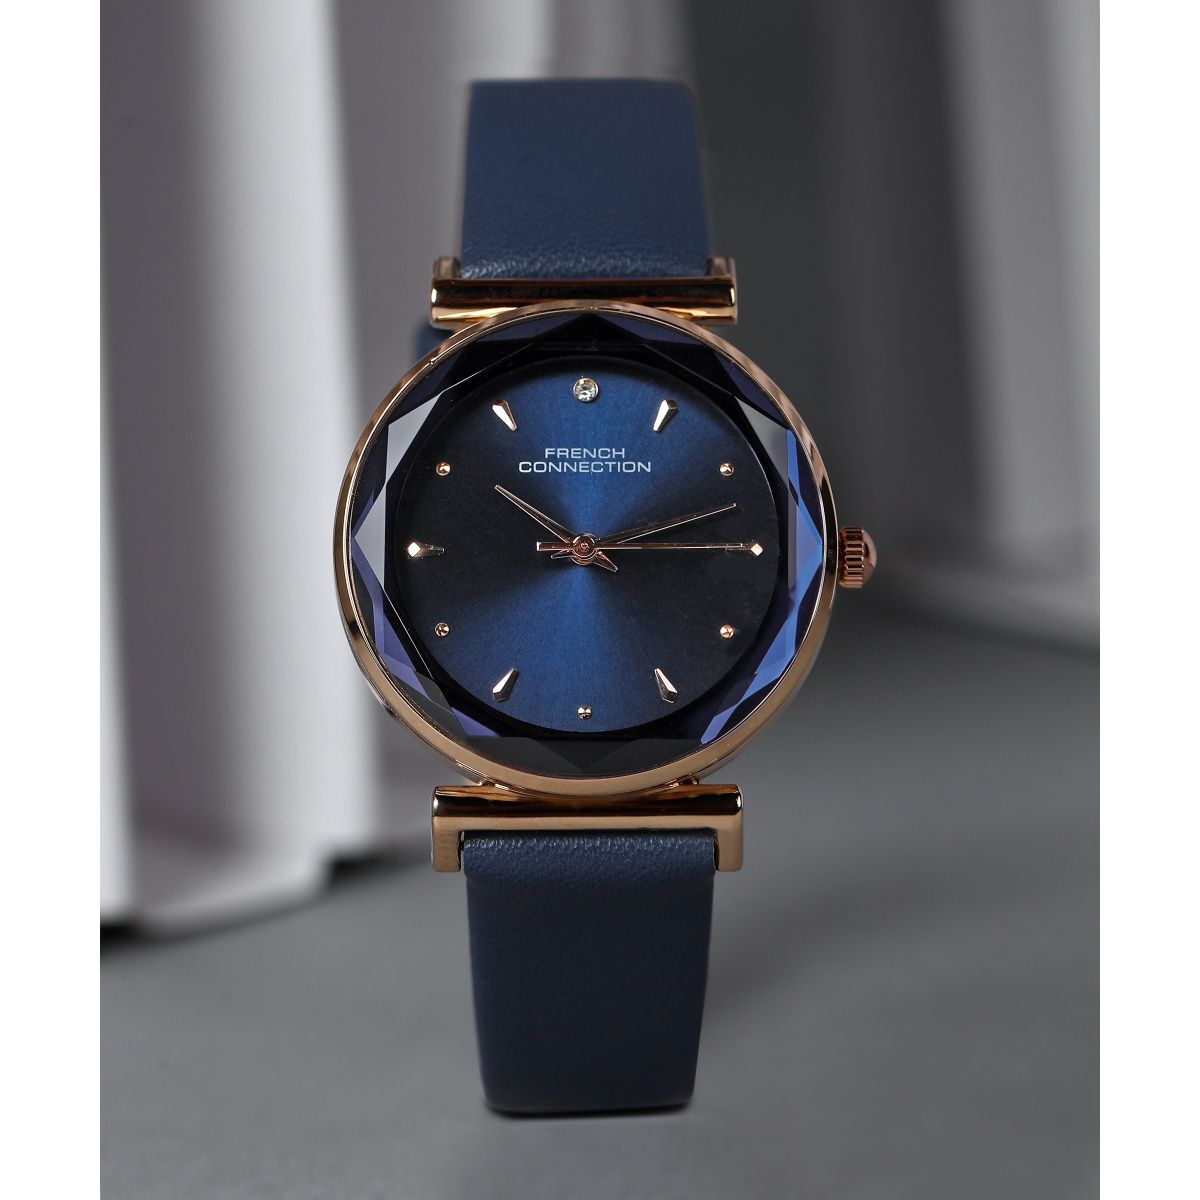 Buy Fastrack Stunner 7.0 Golden Dial Analog Watch for Women 6267WM01  (Large) Online